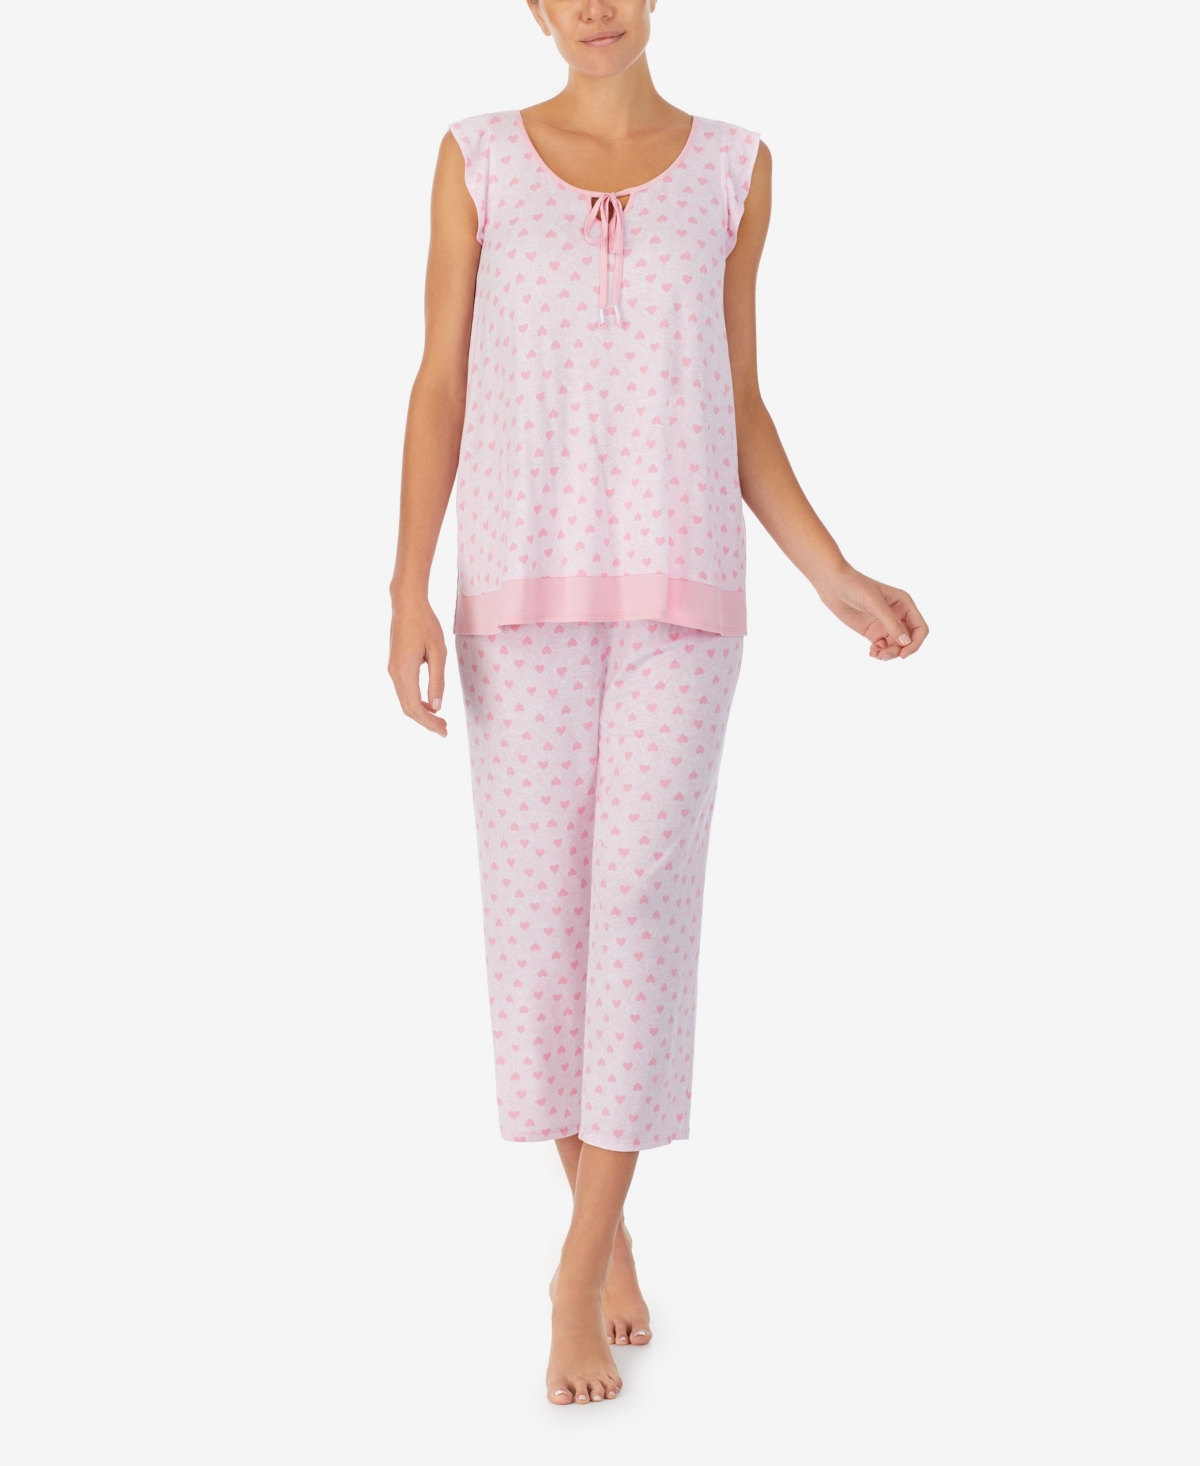 Ellen Tracy Women's Cap Sleeve Pajamas Set